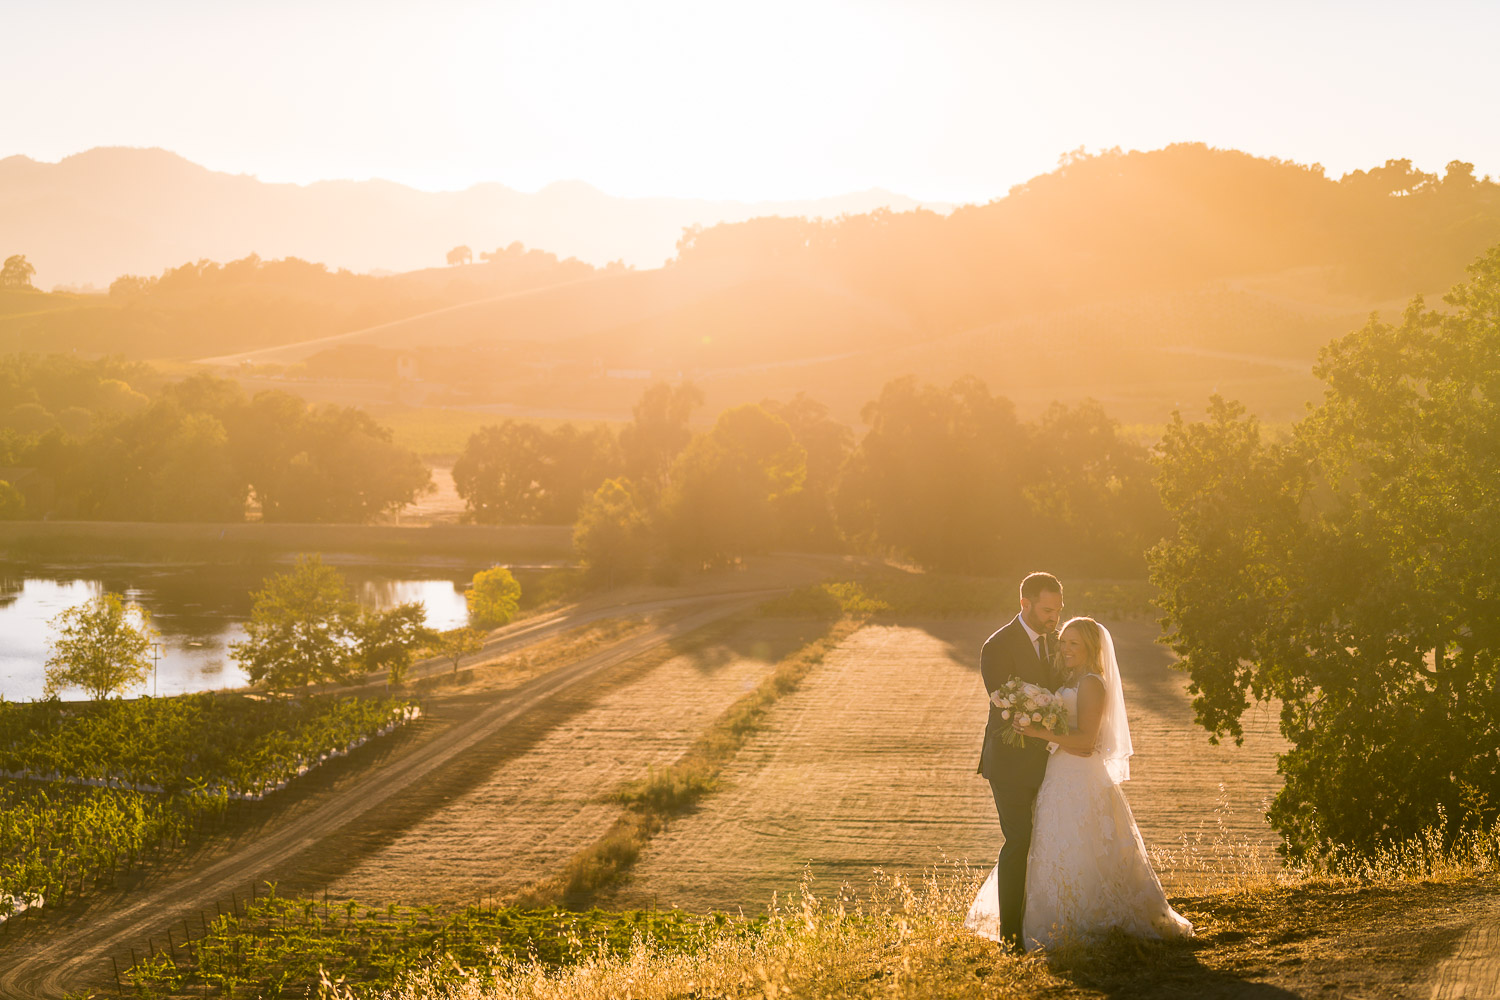 Halter Ranch Wedding Sunset Portraits in vineyard